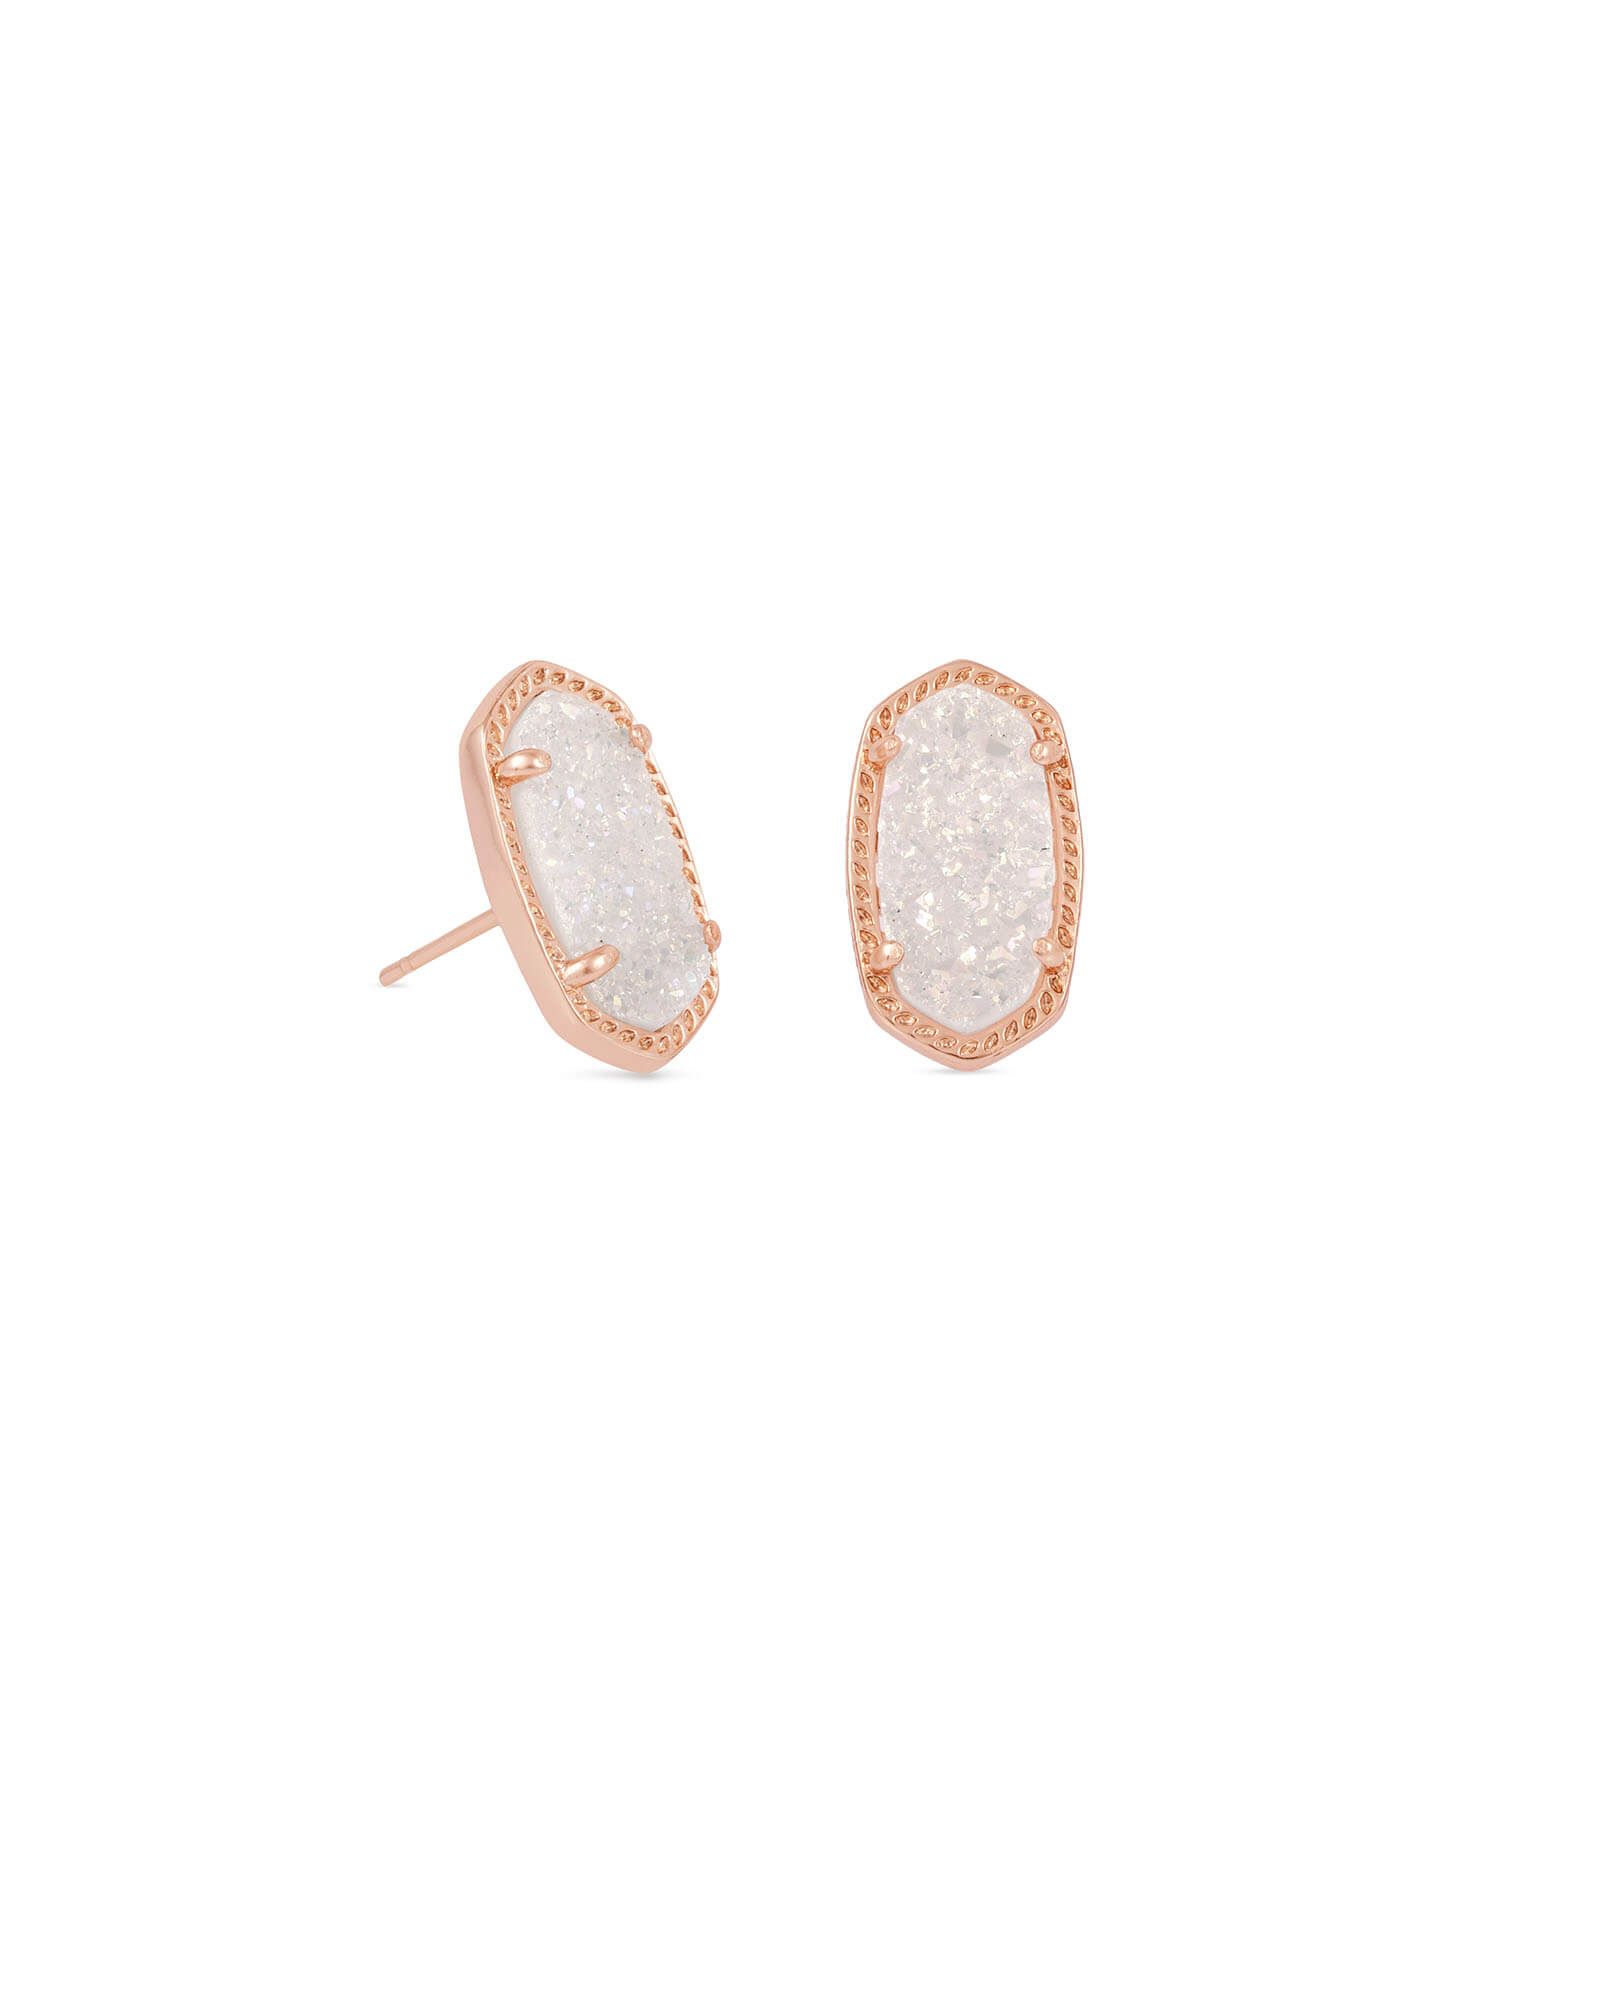 Ellie Rose Gold Stud Earrings in Iridescent Drusy | Kendra Scott